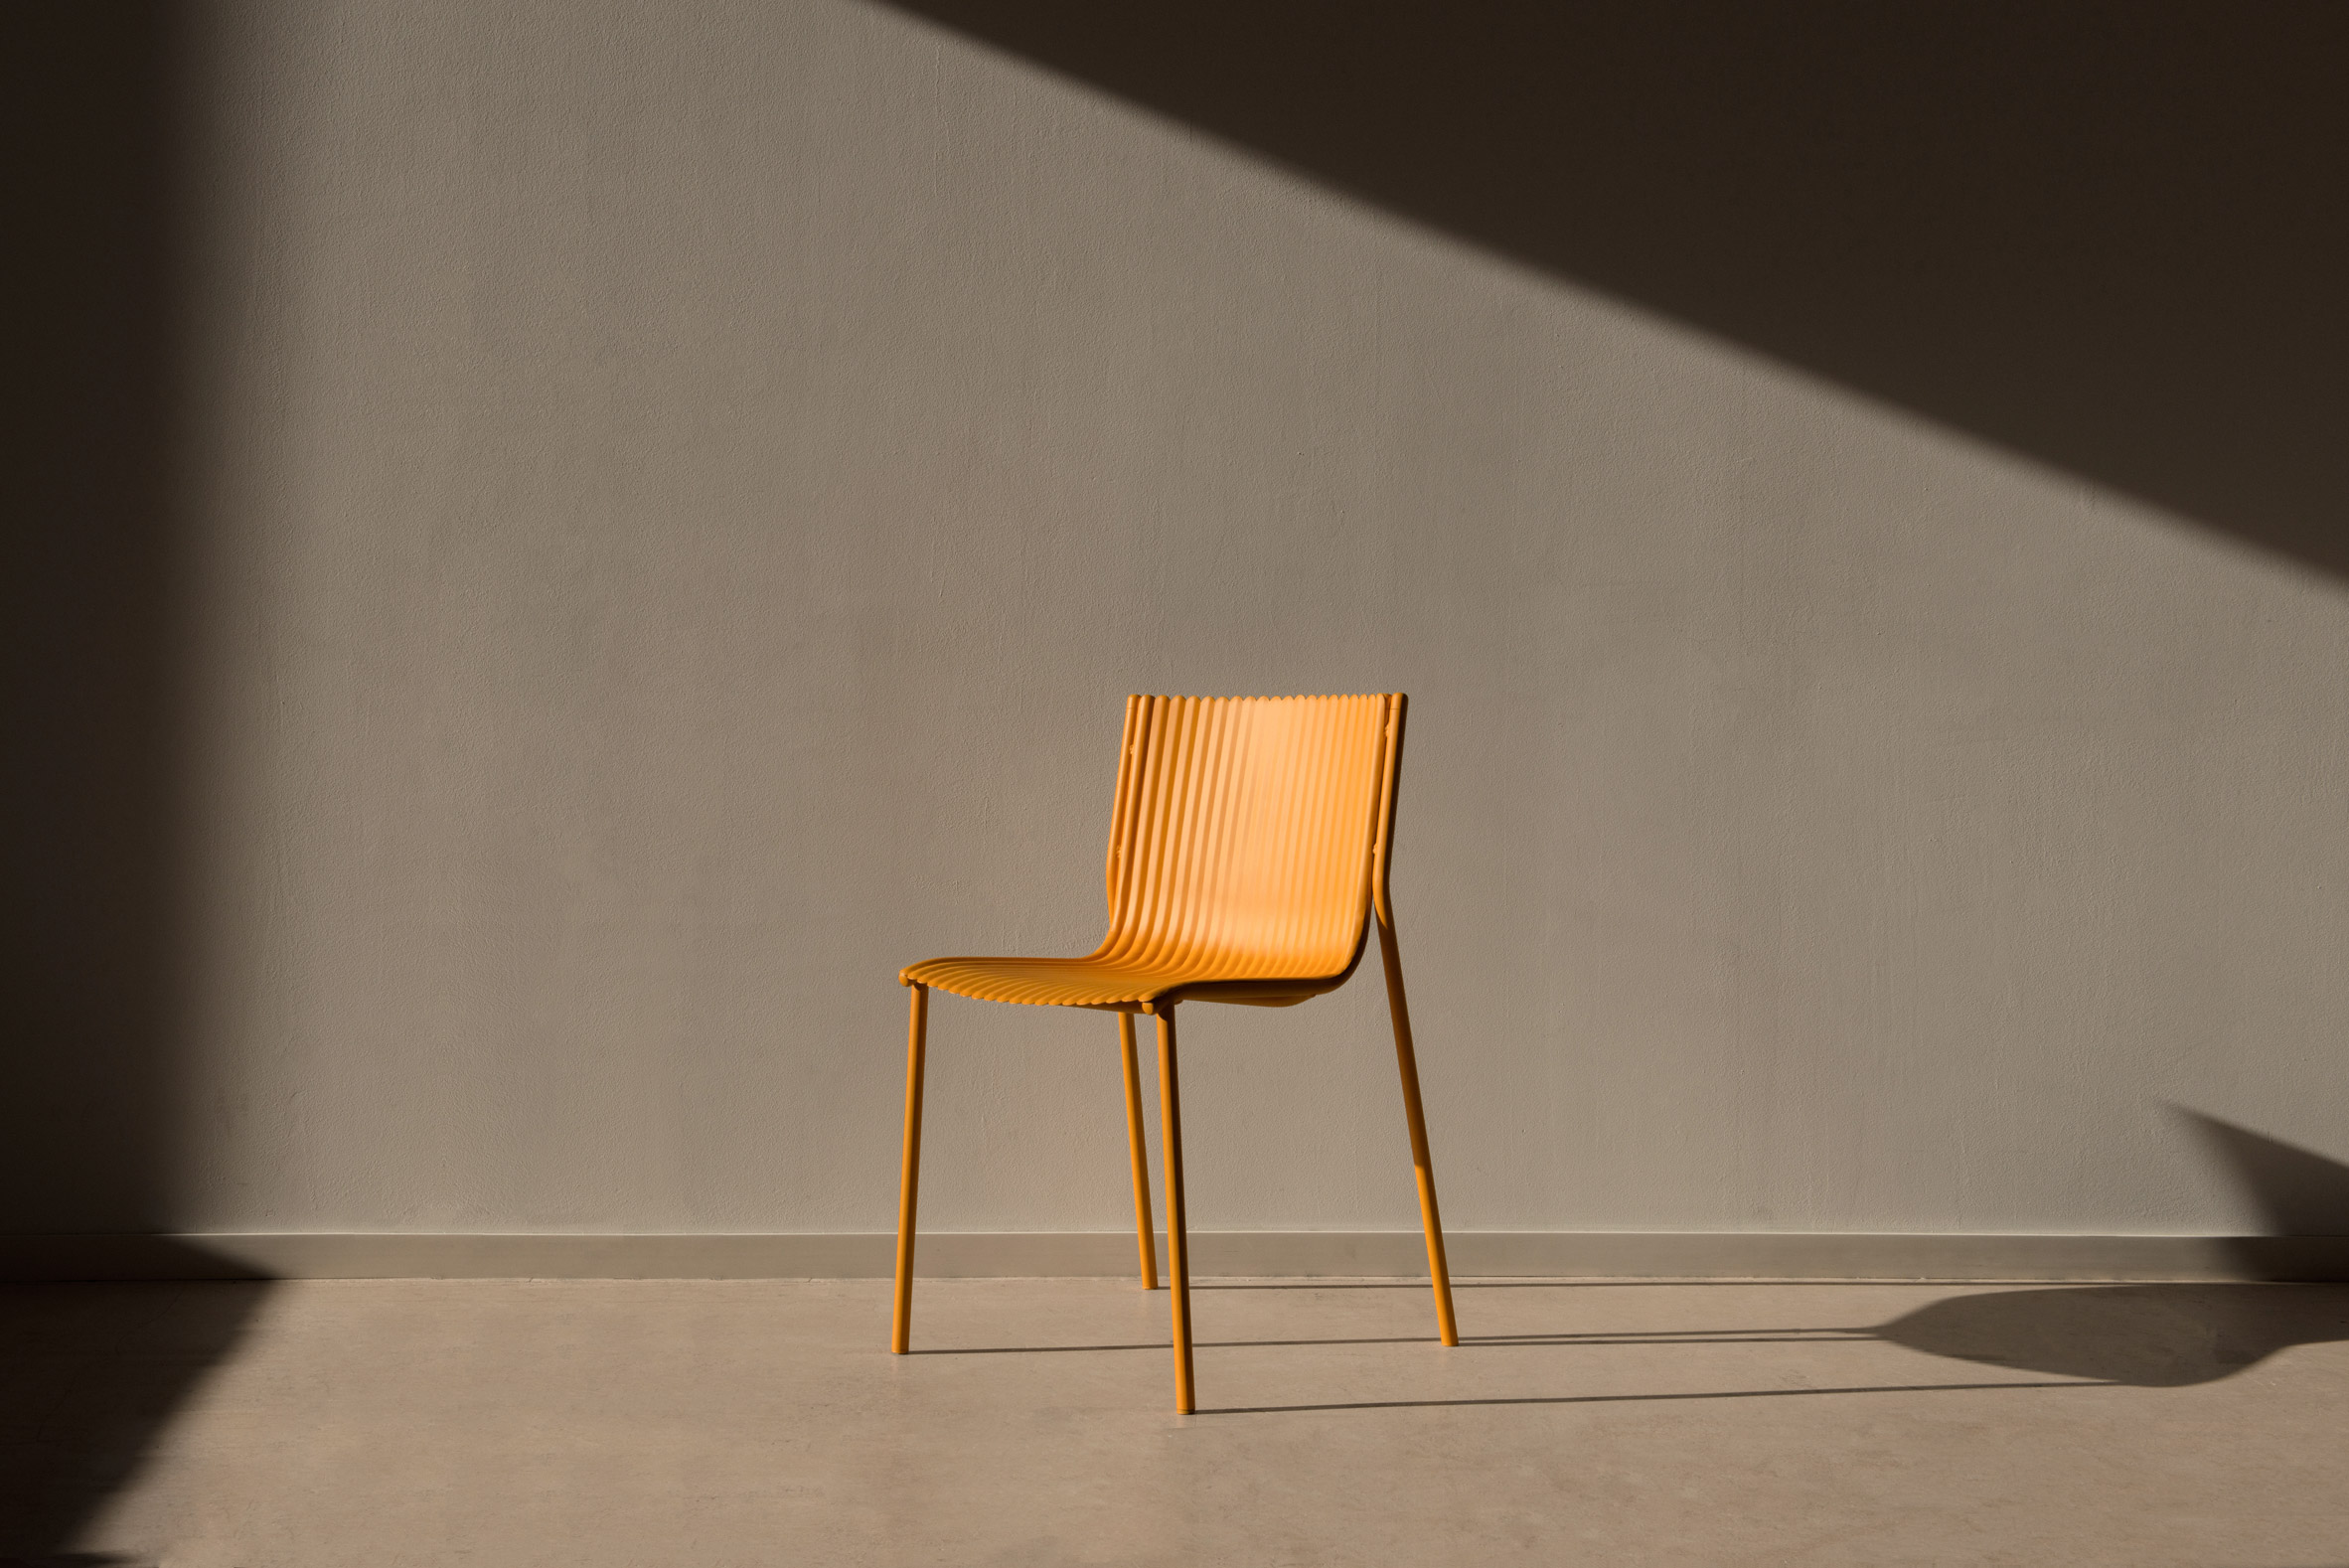 Ilseop Yoon creates pleated chairs from sheets of aluminium